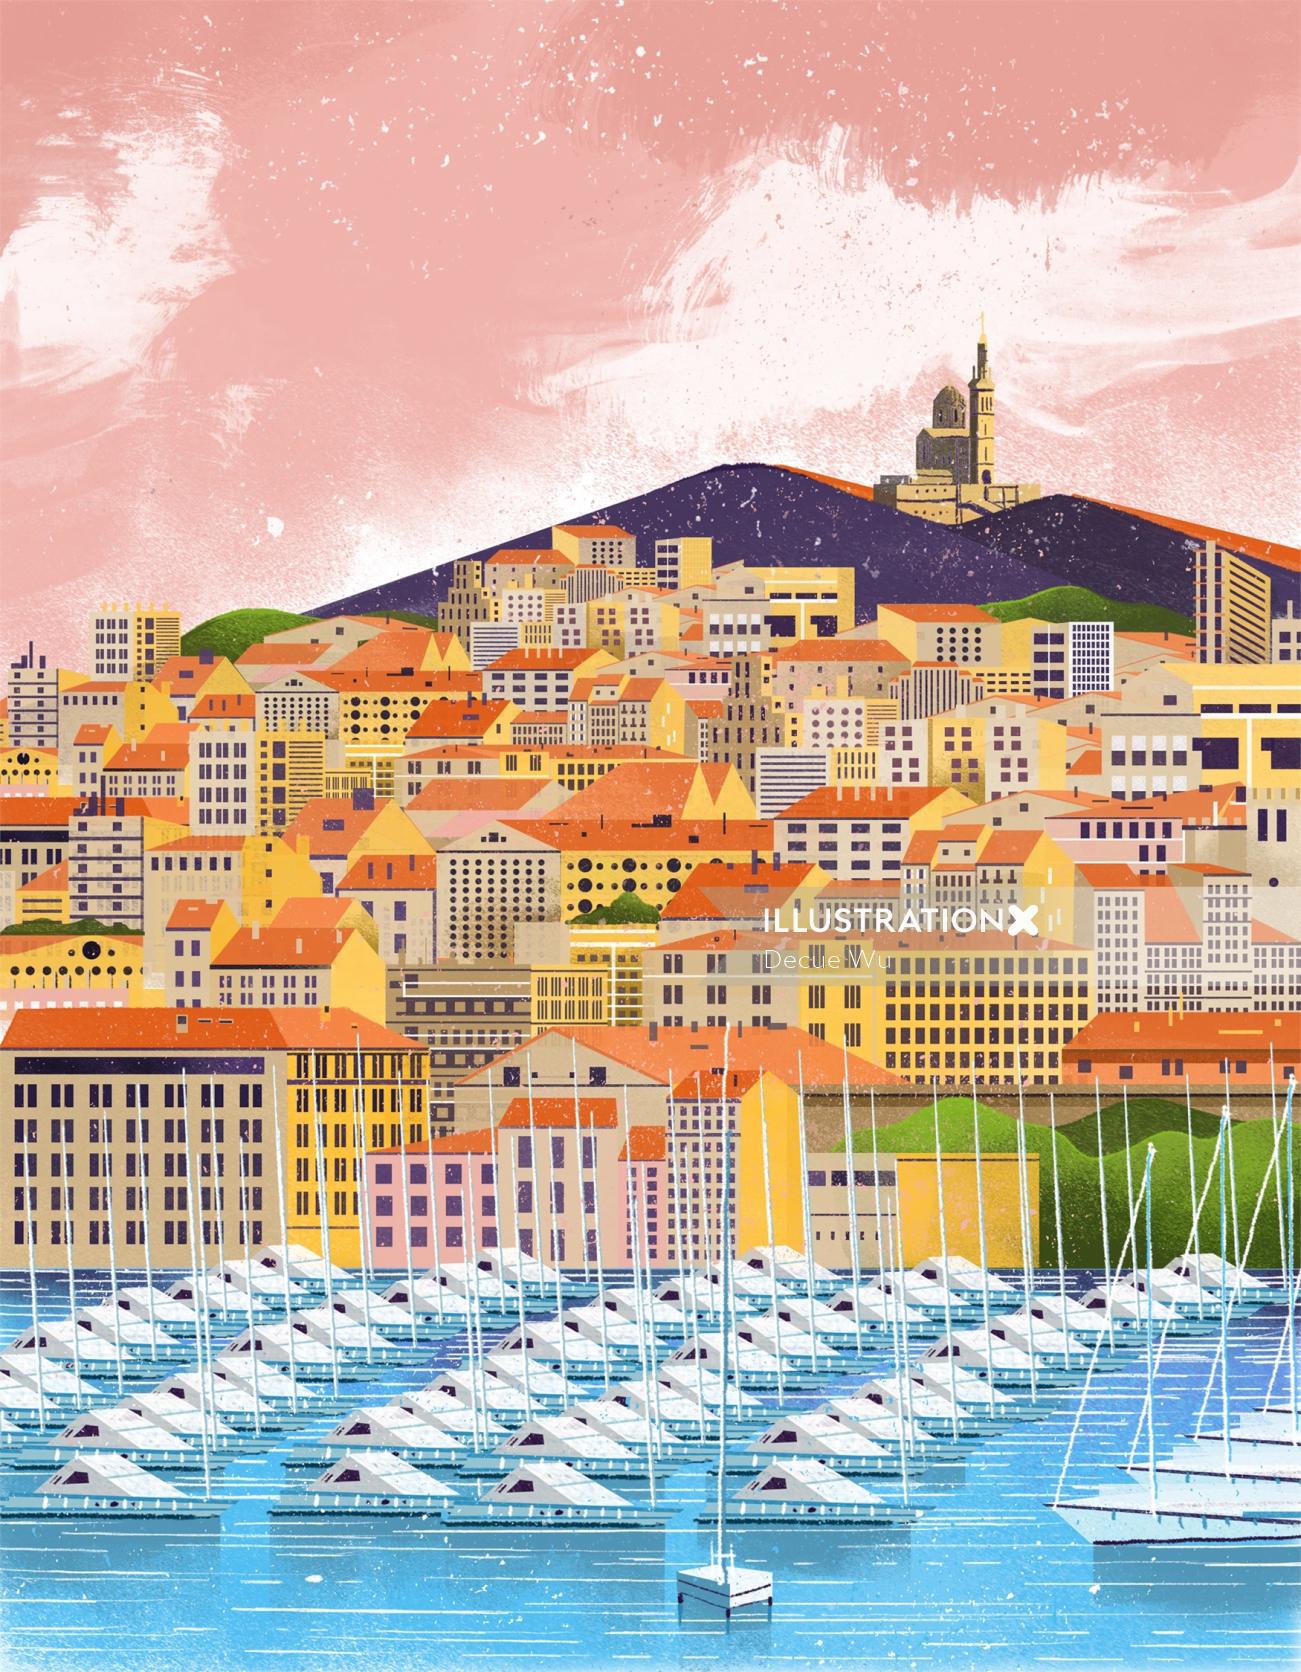 An illustration of Marseille city